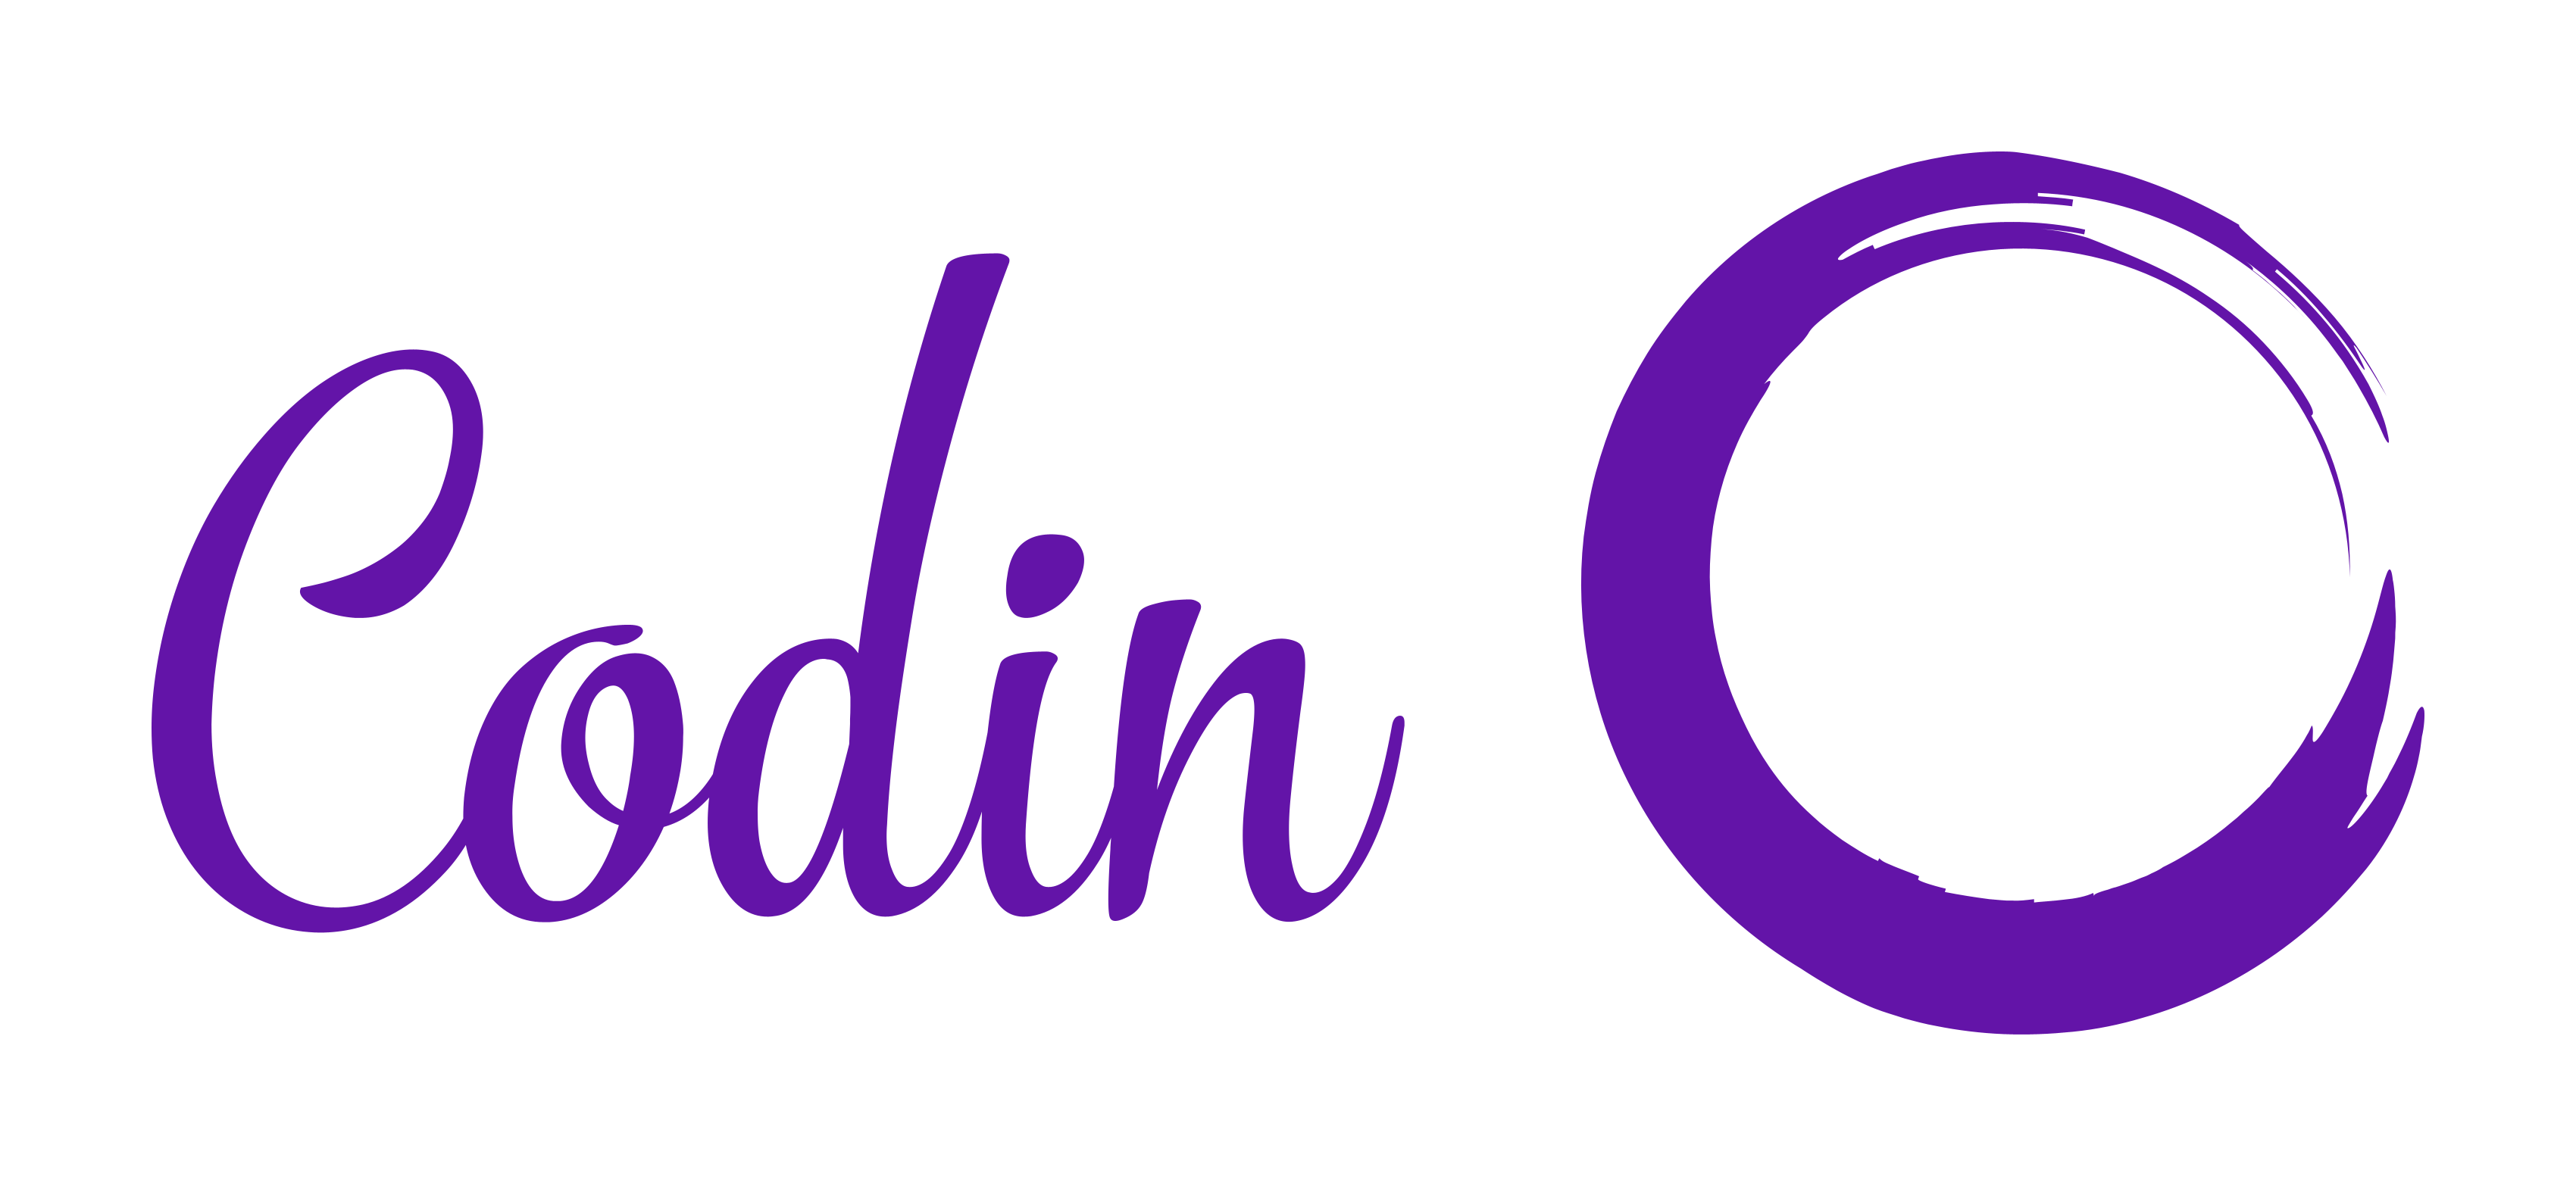 coding-logo